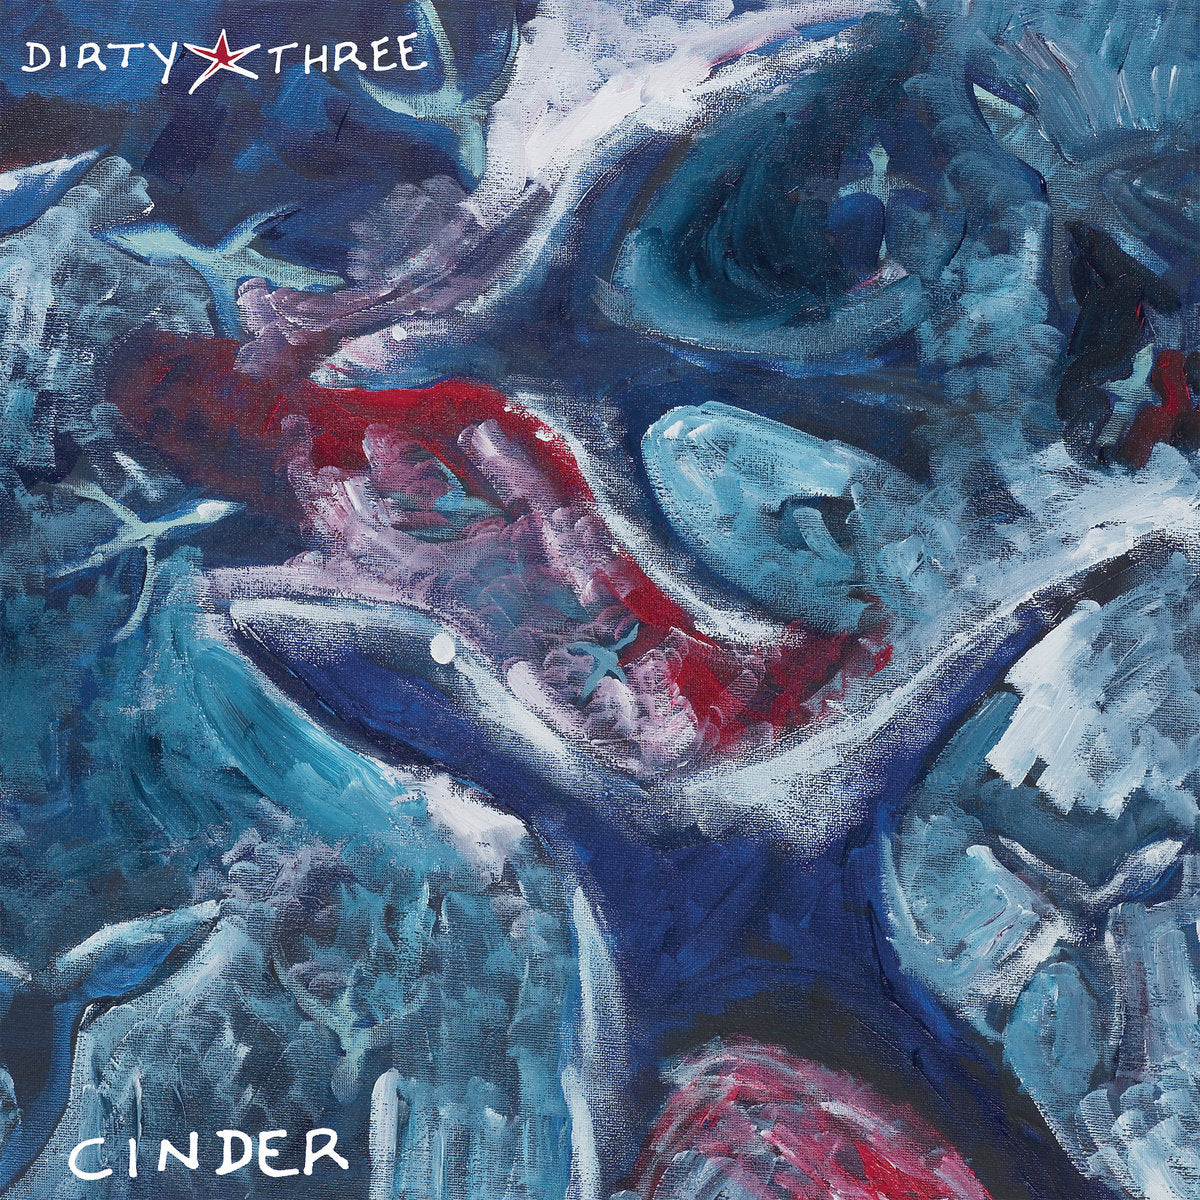 DIRTY THREE - Cinder - 2LP - Vinyl